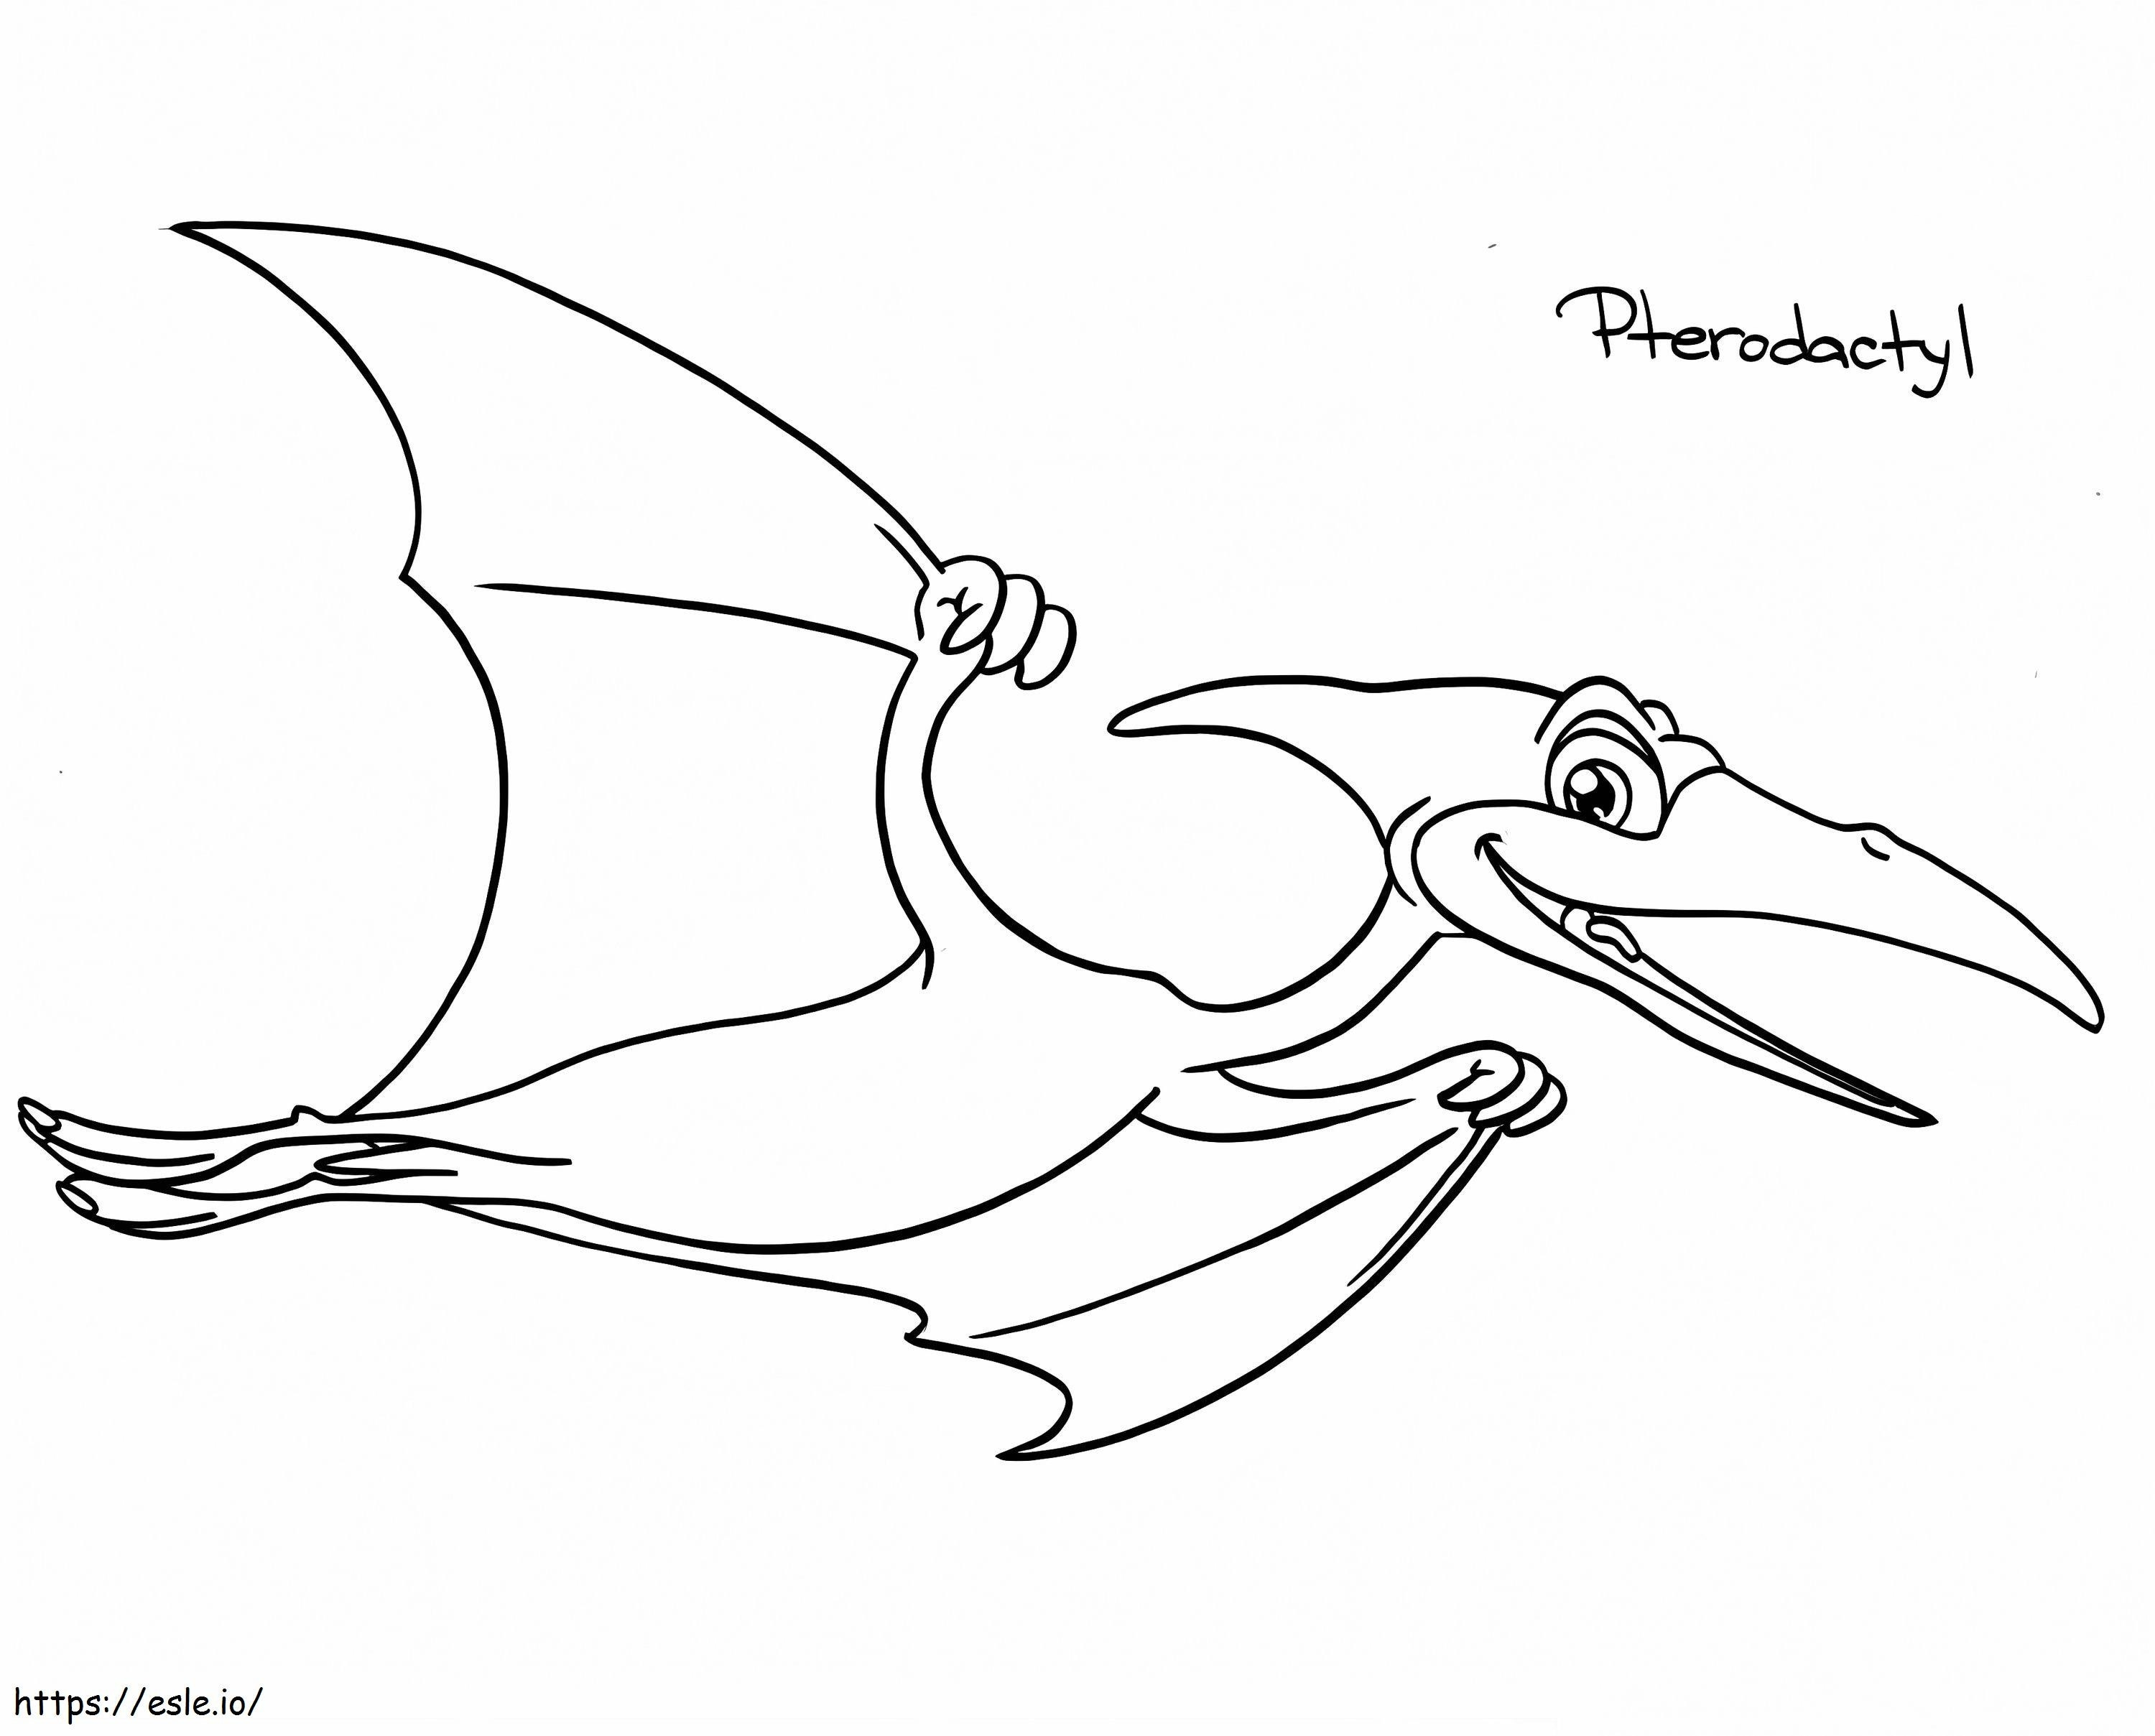 Lächelnder Pterodaktylus ausmalbilder